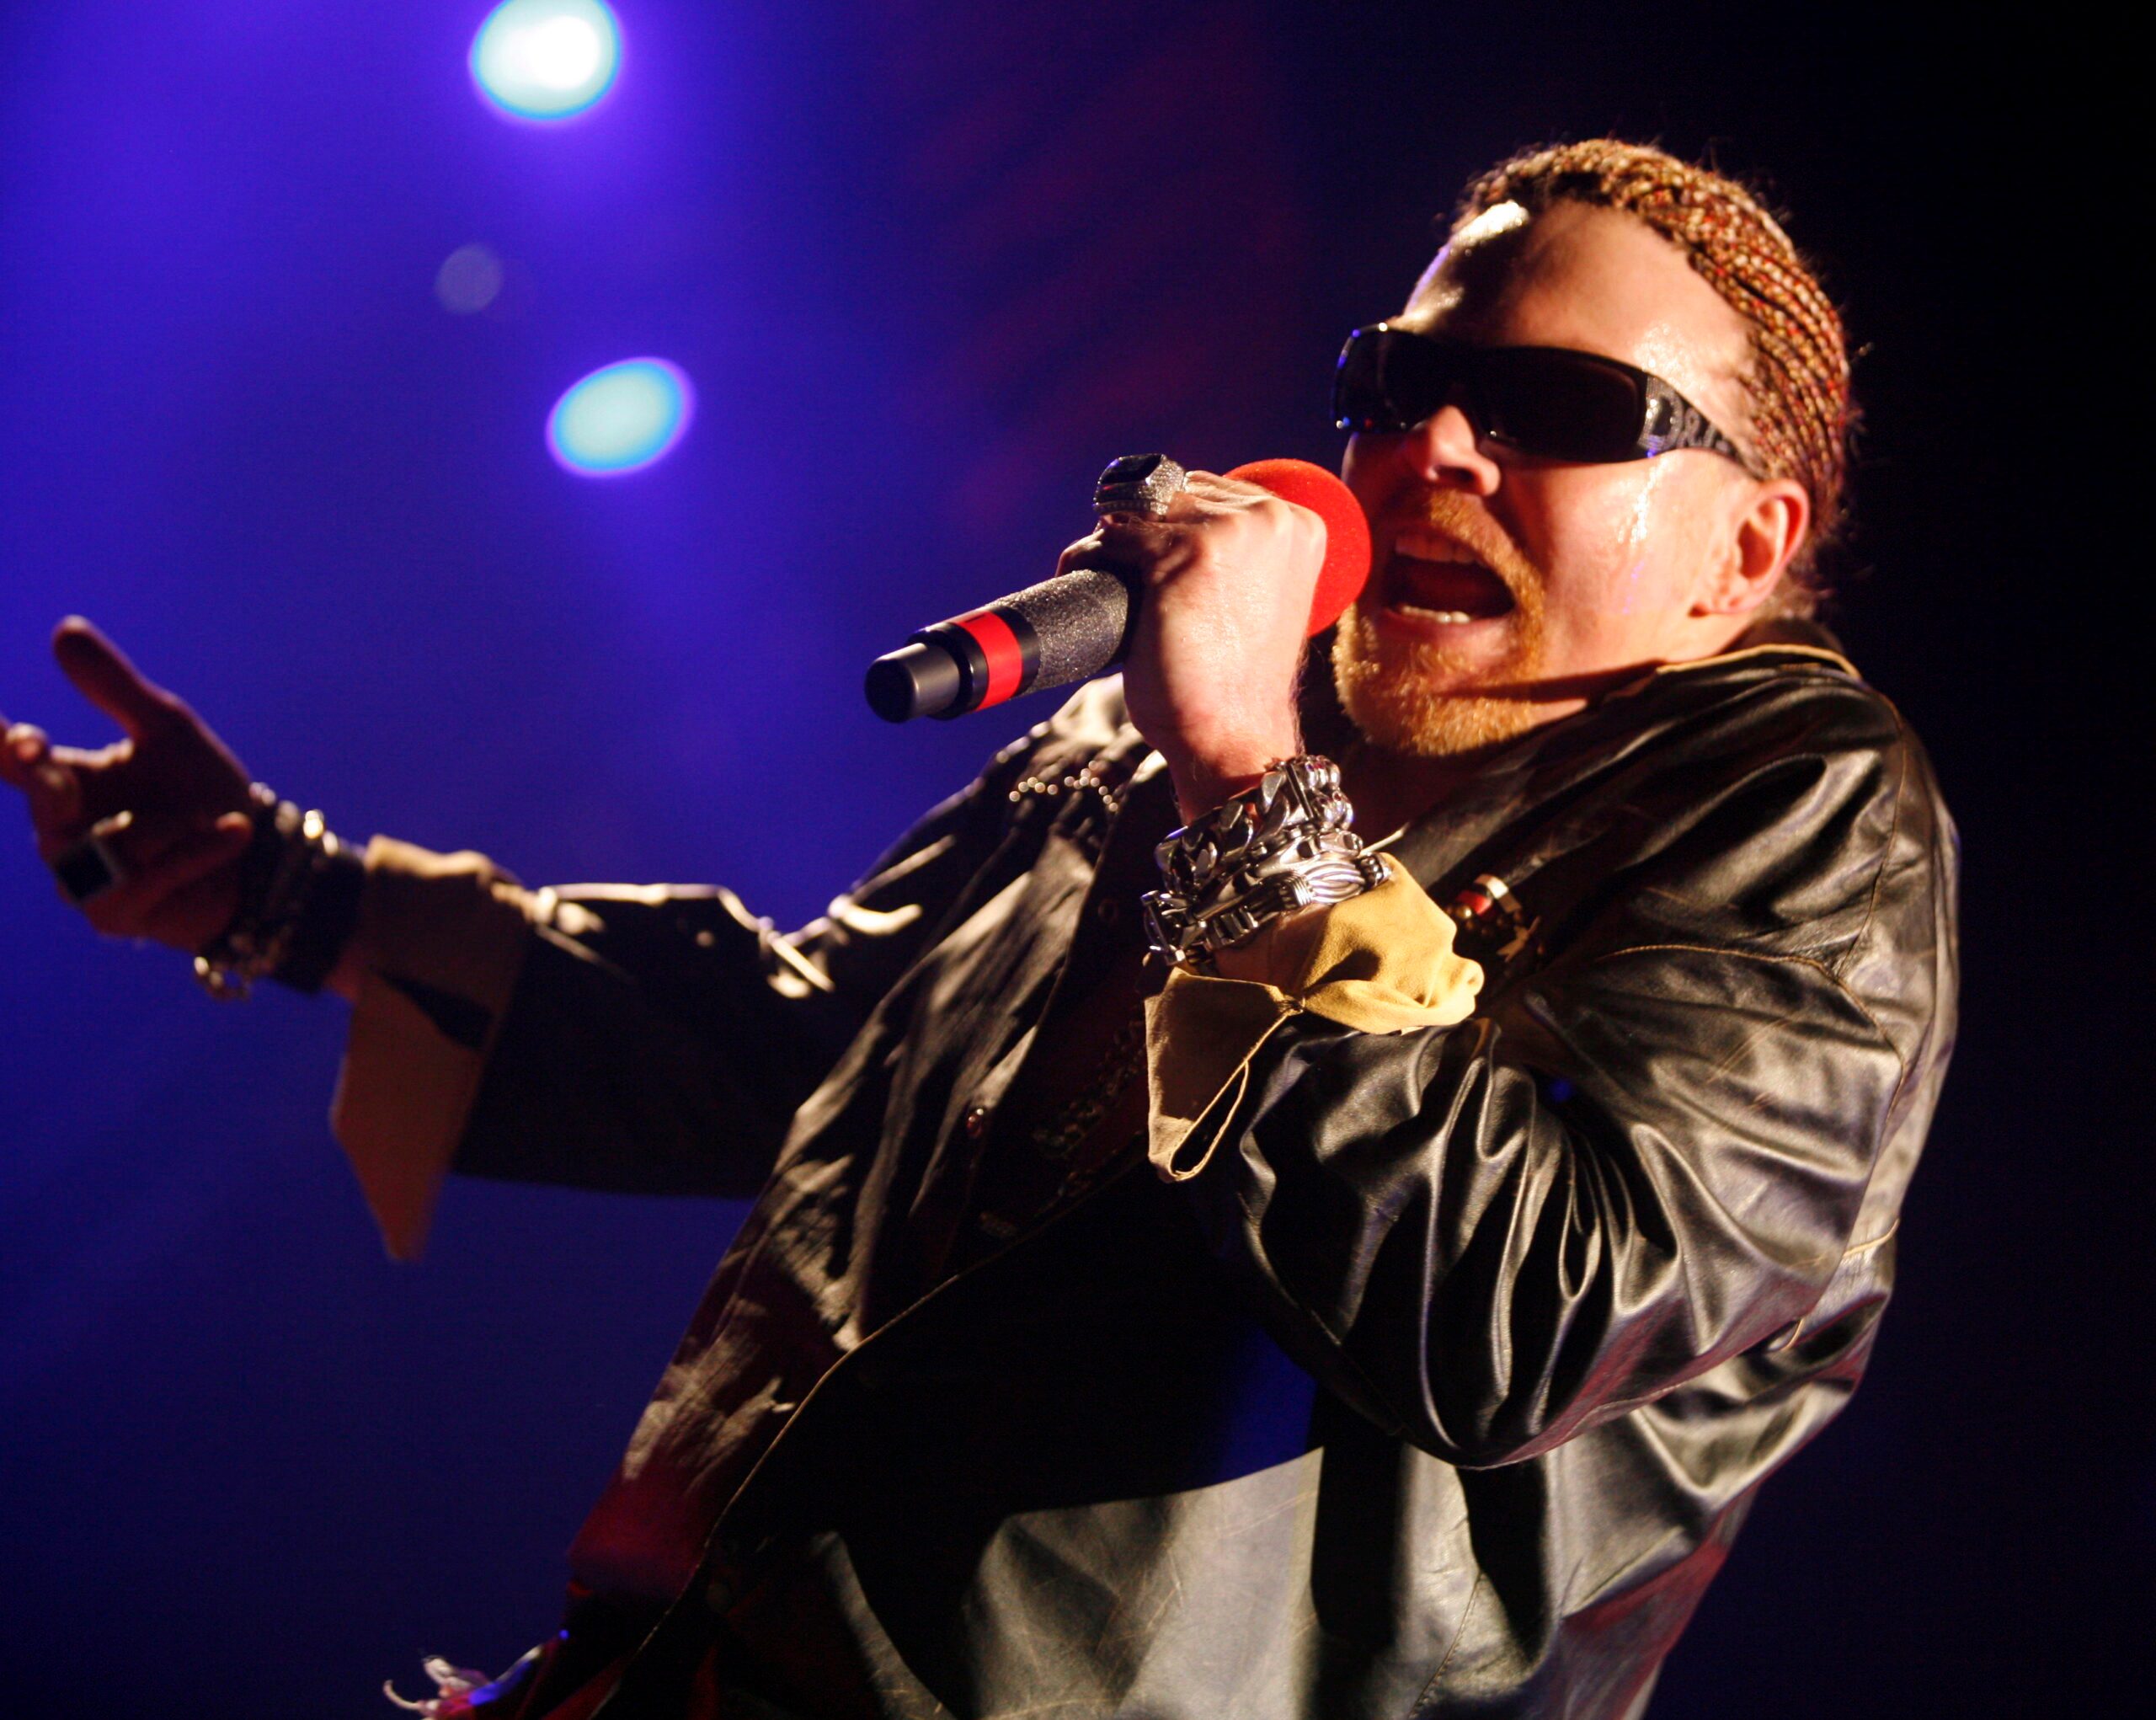 Guns N’ Roses set 21-date reunion tour across North America